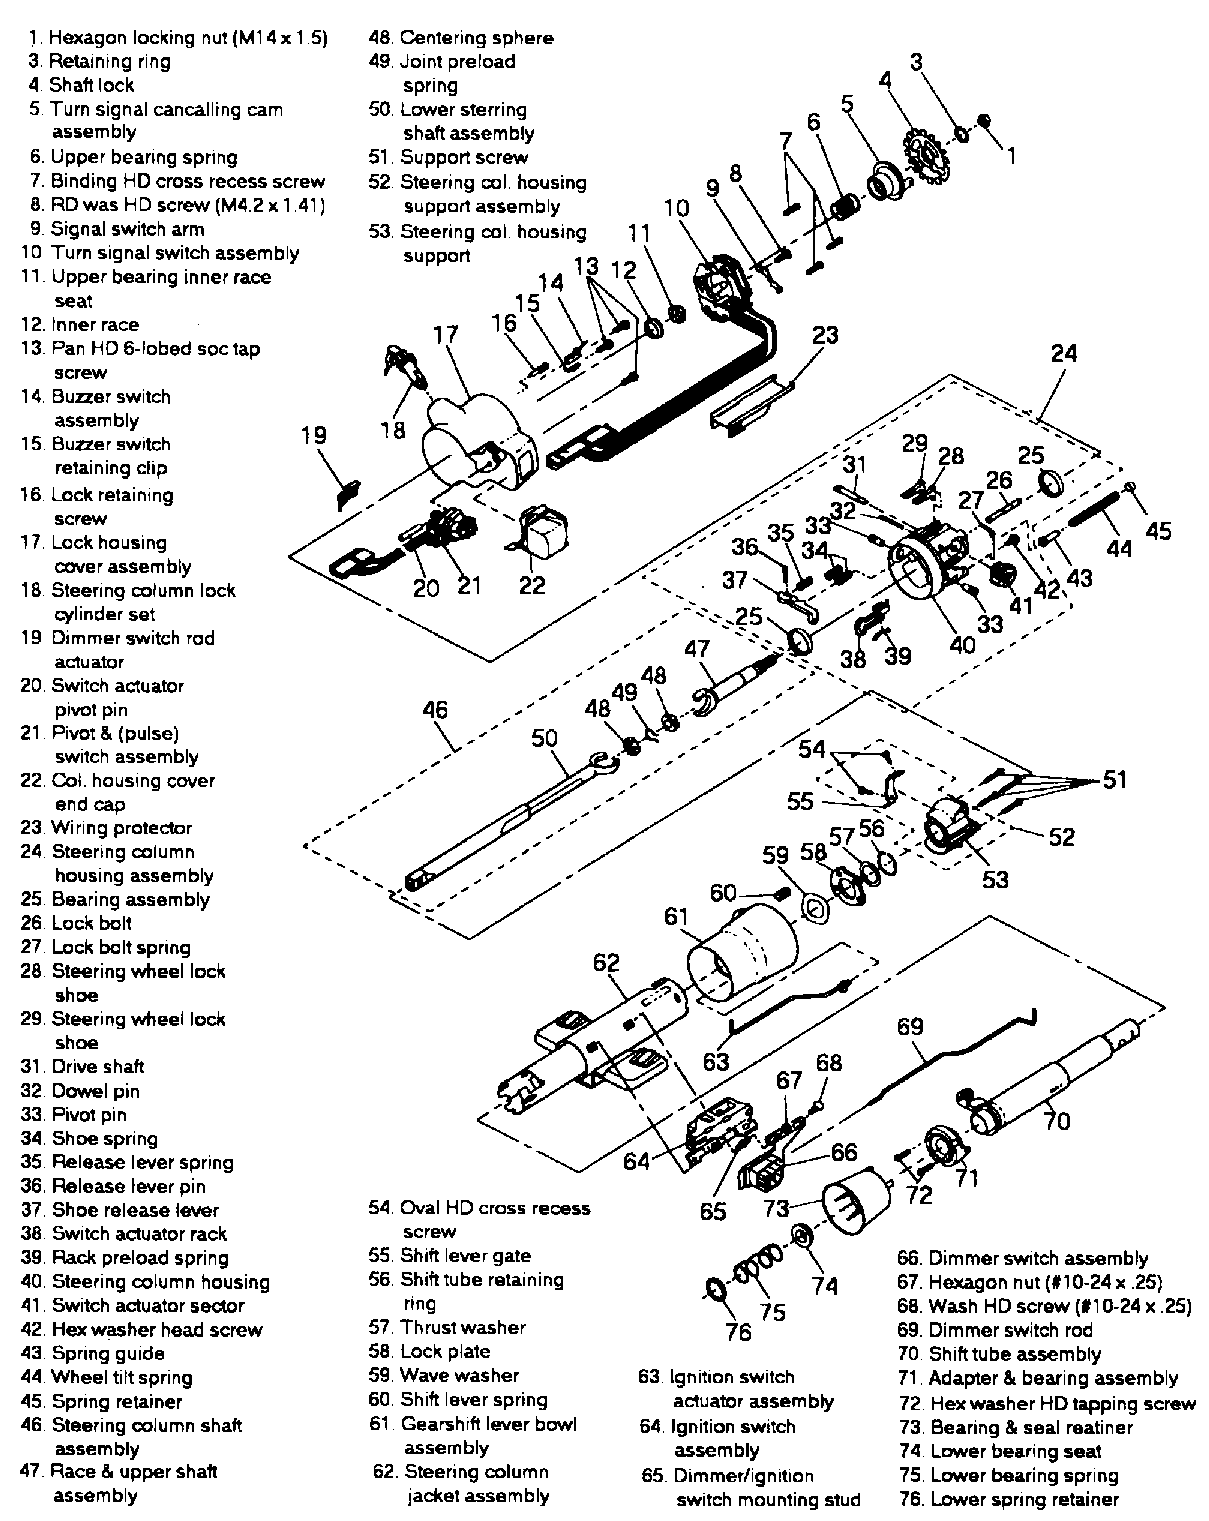 1992 chevy cheyenne ignition wiring diagram